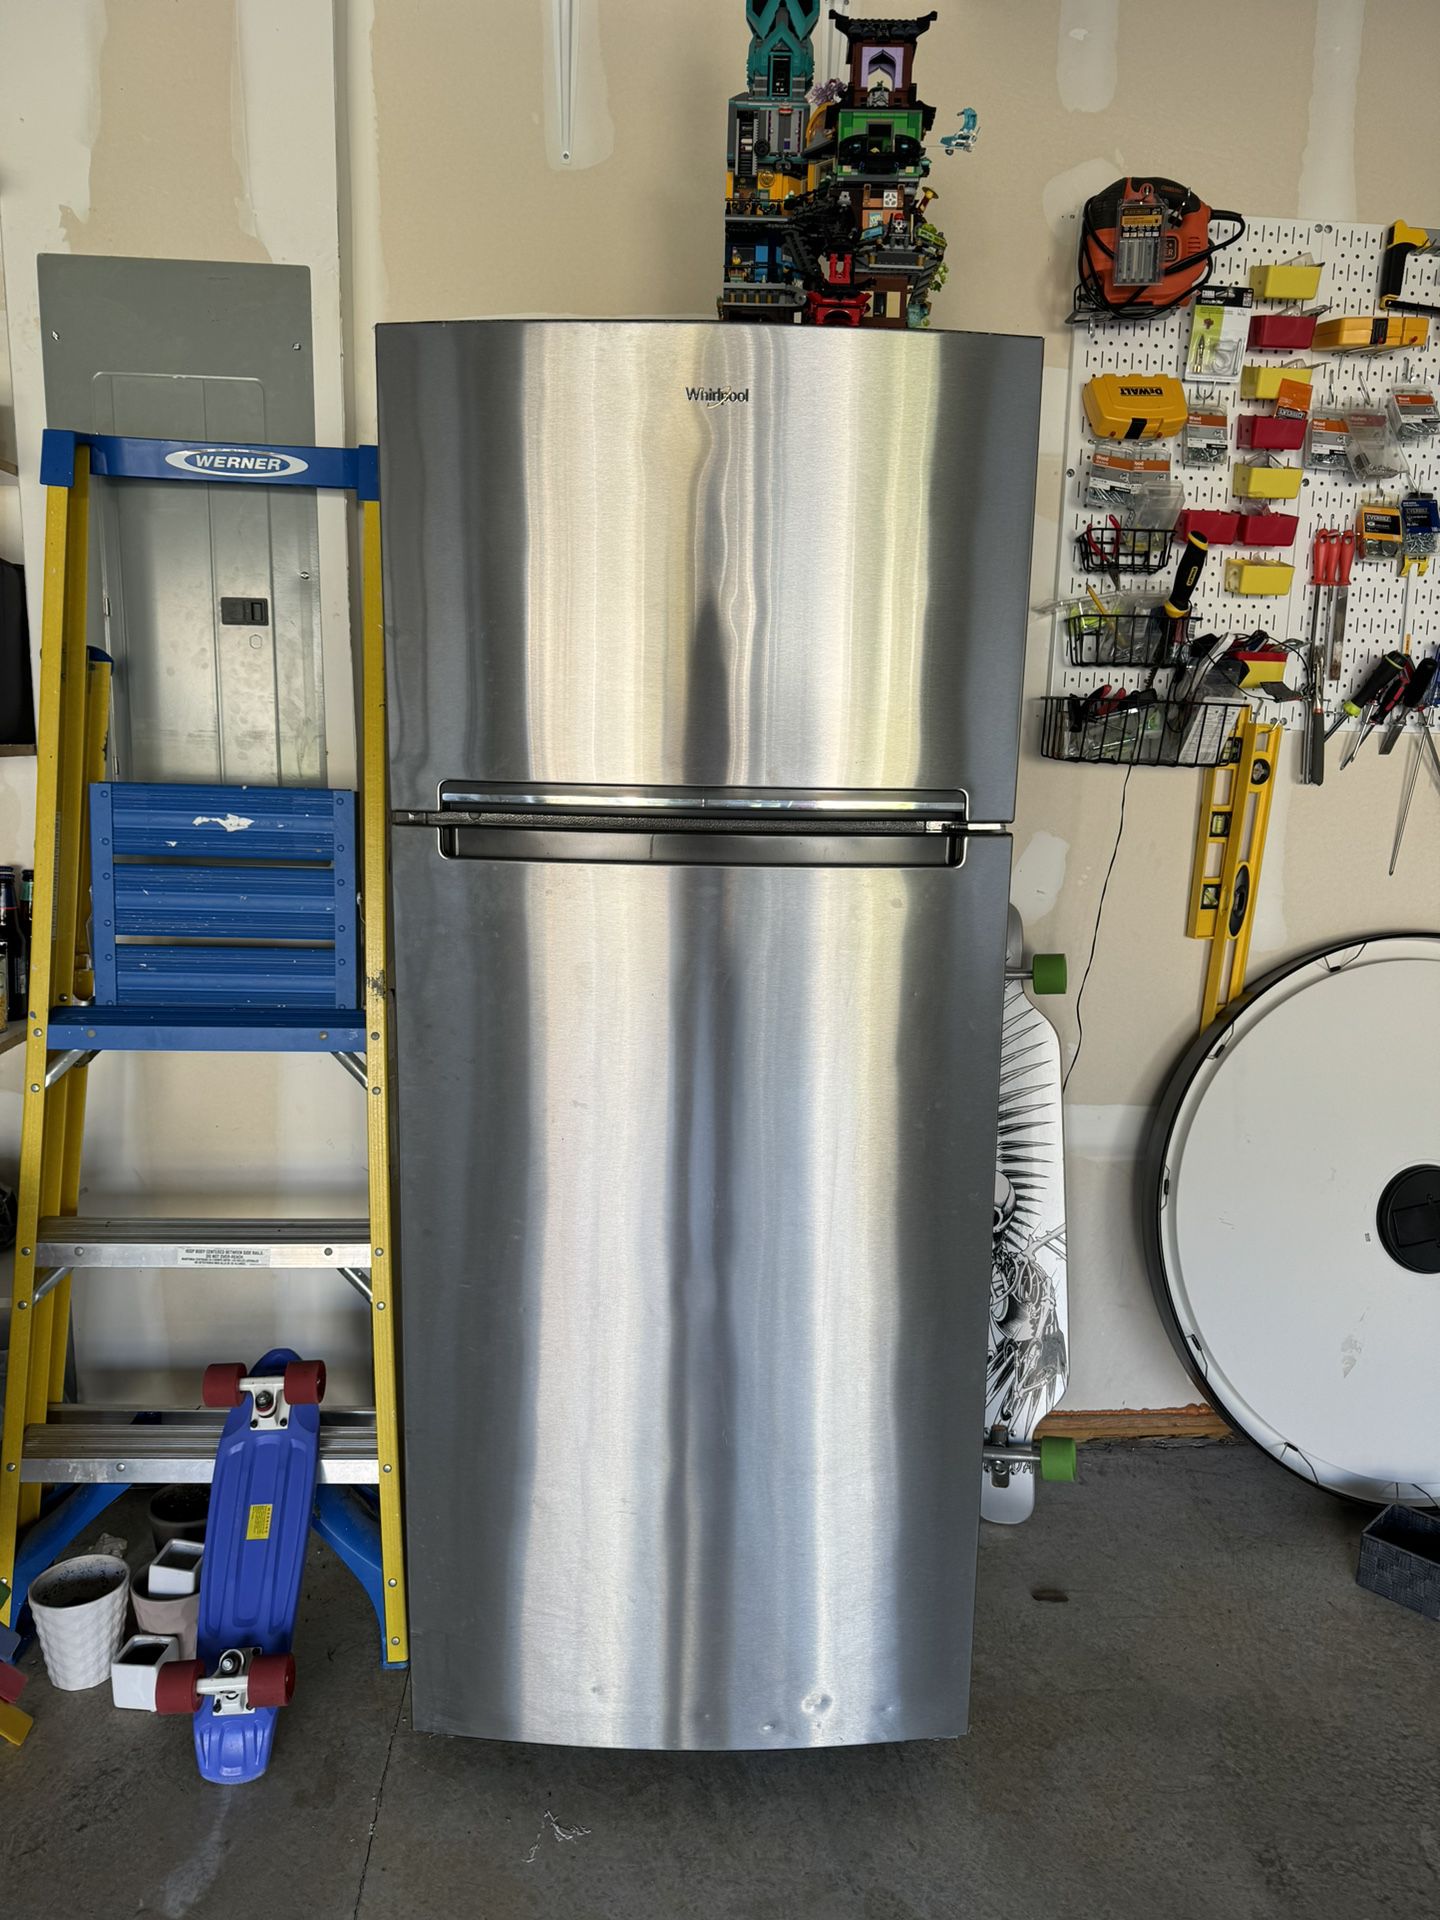 Whirlpool - 17.6 Cu. Ft. Top-Freezer Refrigerator - Stainless Steel